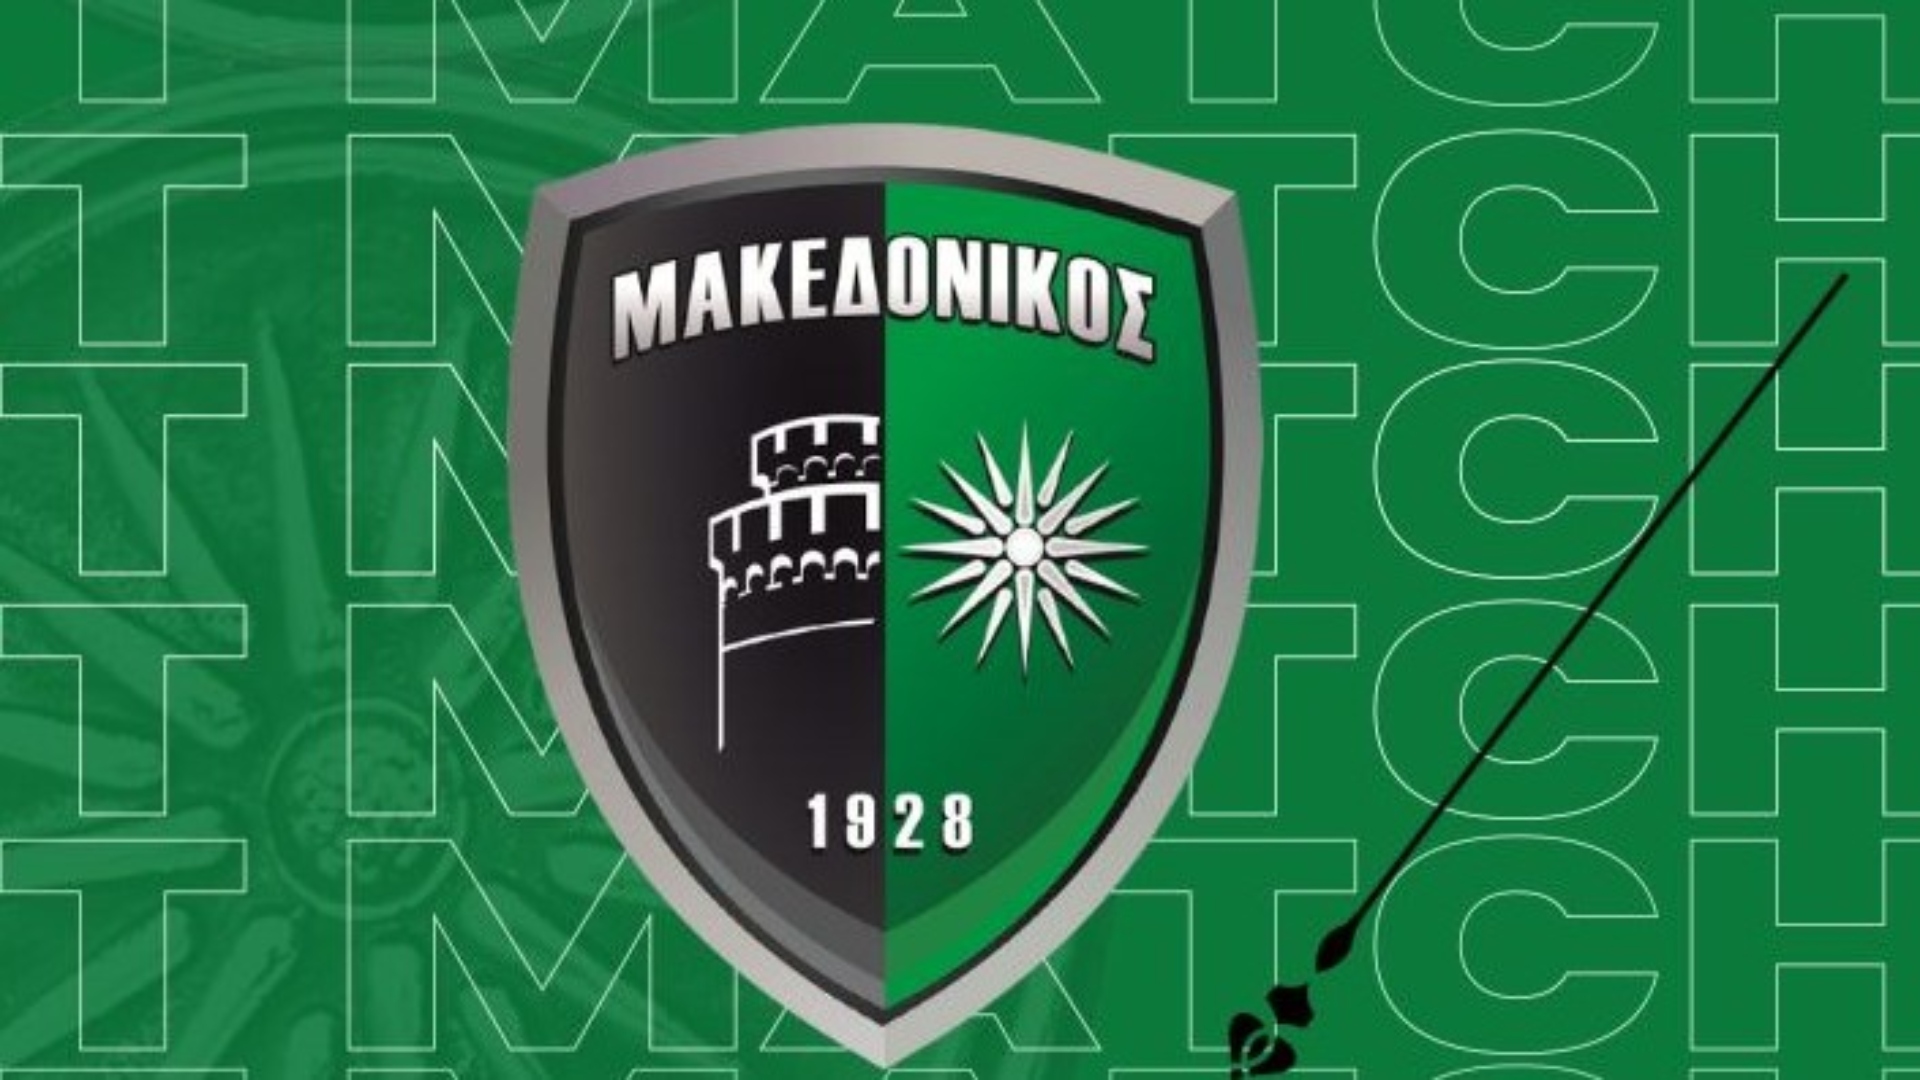 Super League 2-Κ19: Το ασύλληπτο γκολ-φάουλ του Τάσου Κωνσταντινίδη στο Κοζάνη-Μακεδονικός (vid)